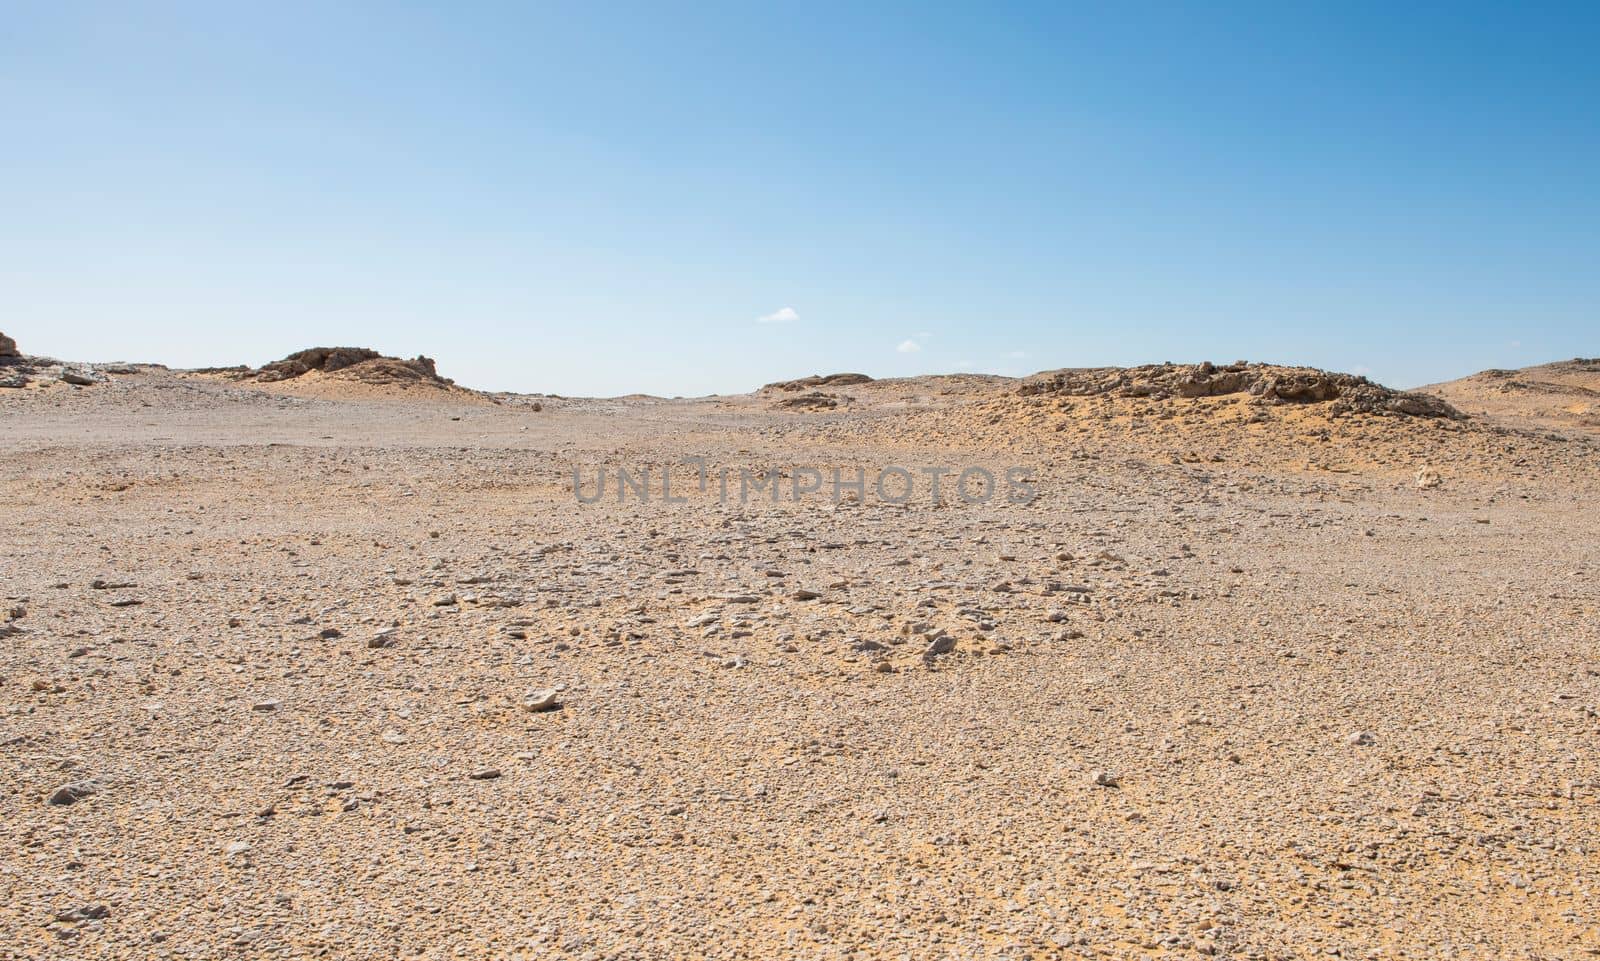 Barren desert landscape in hot climate with rocky scenery by paulvinten